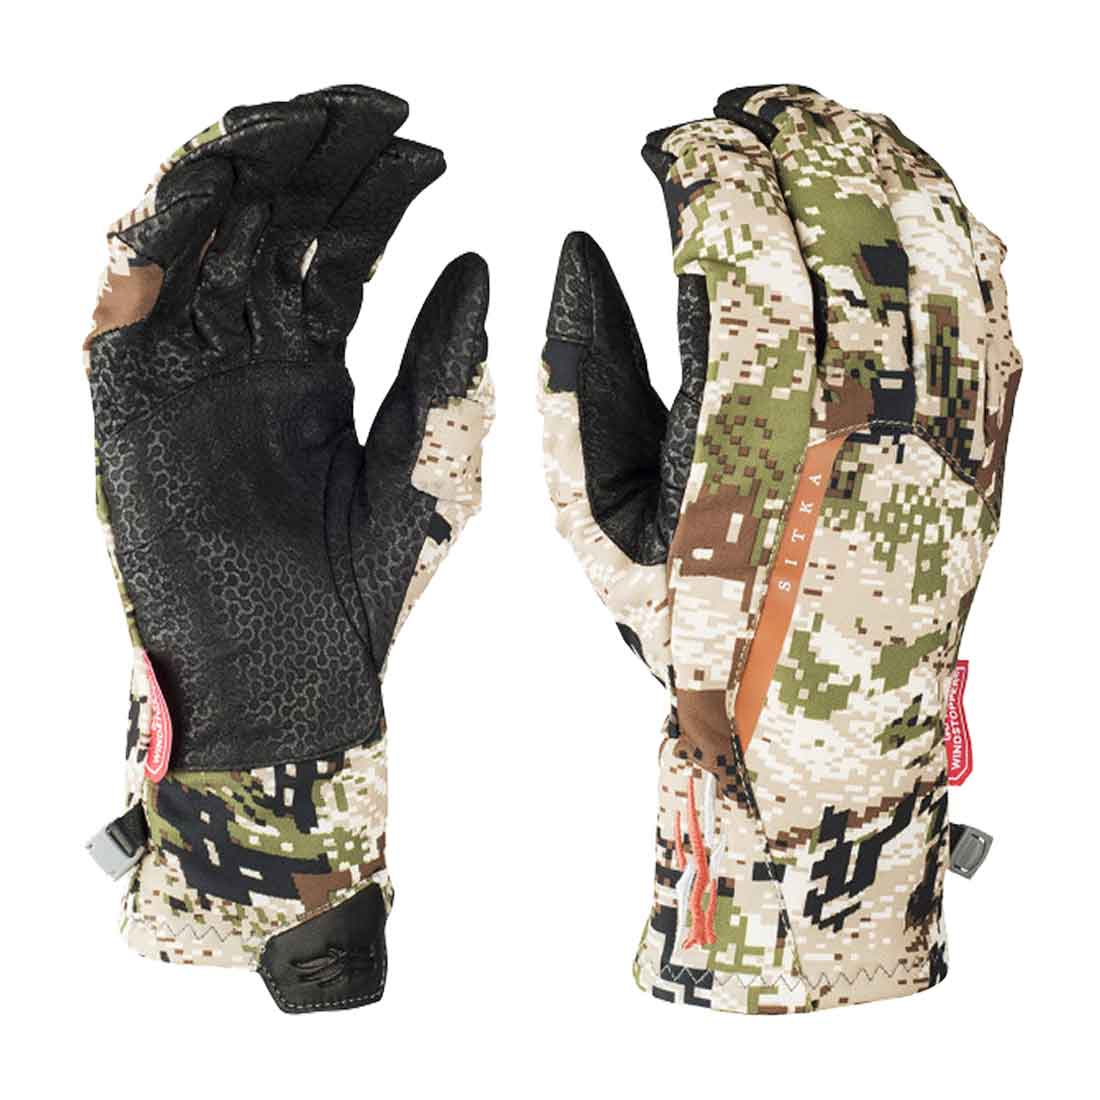 Sitka Mountain WS Glove (Discontinued) - Men's